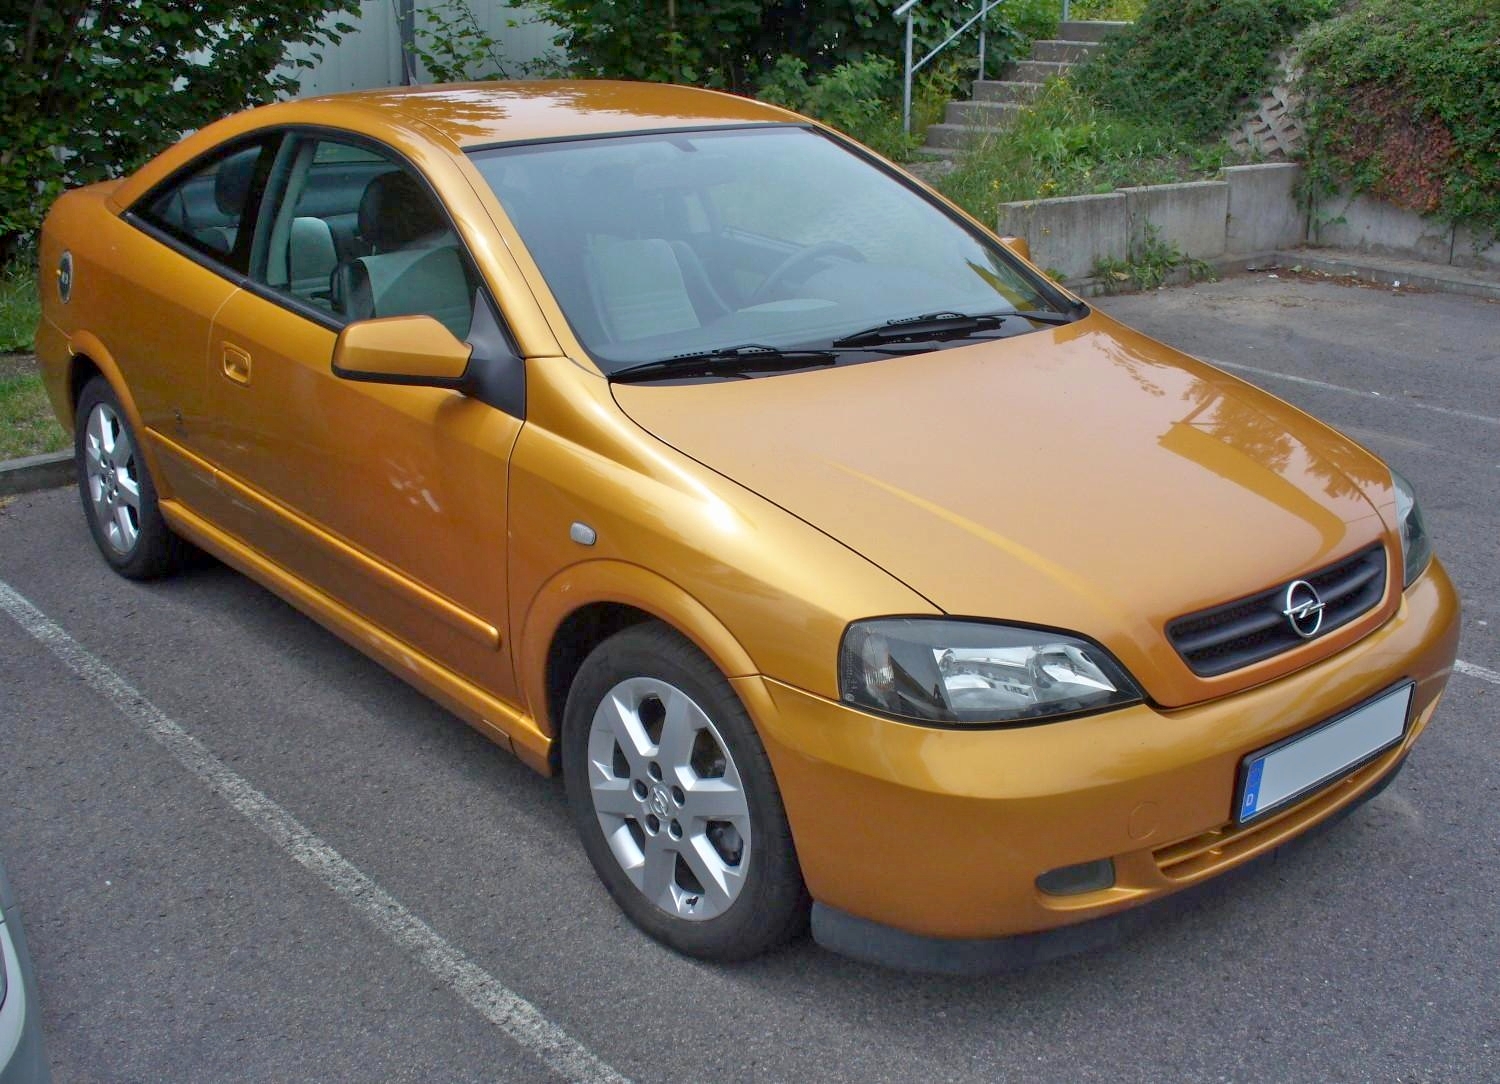 File:Opel Astra G CoupÃ©.JPG - Wikimedia Commons